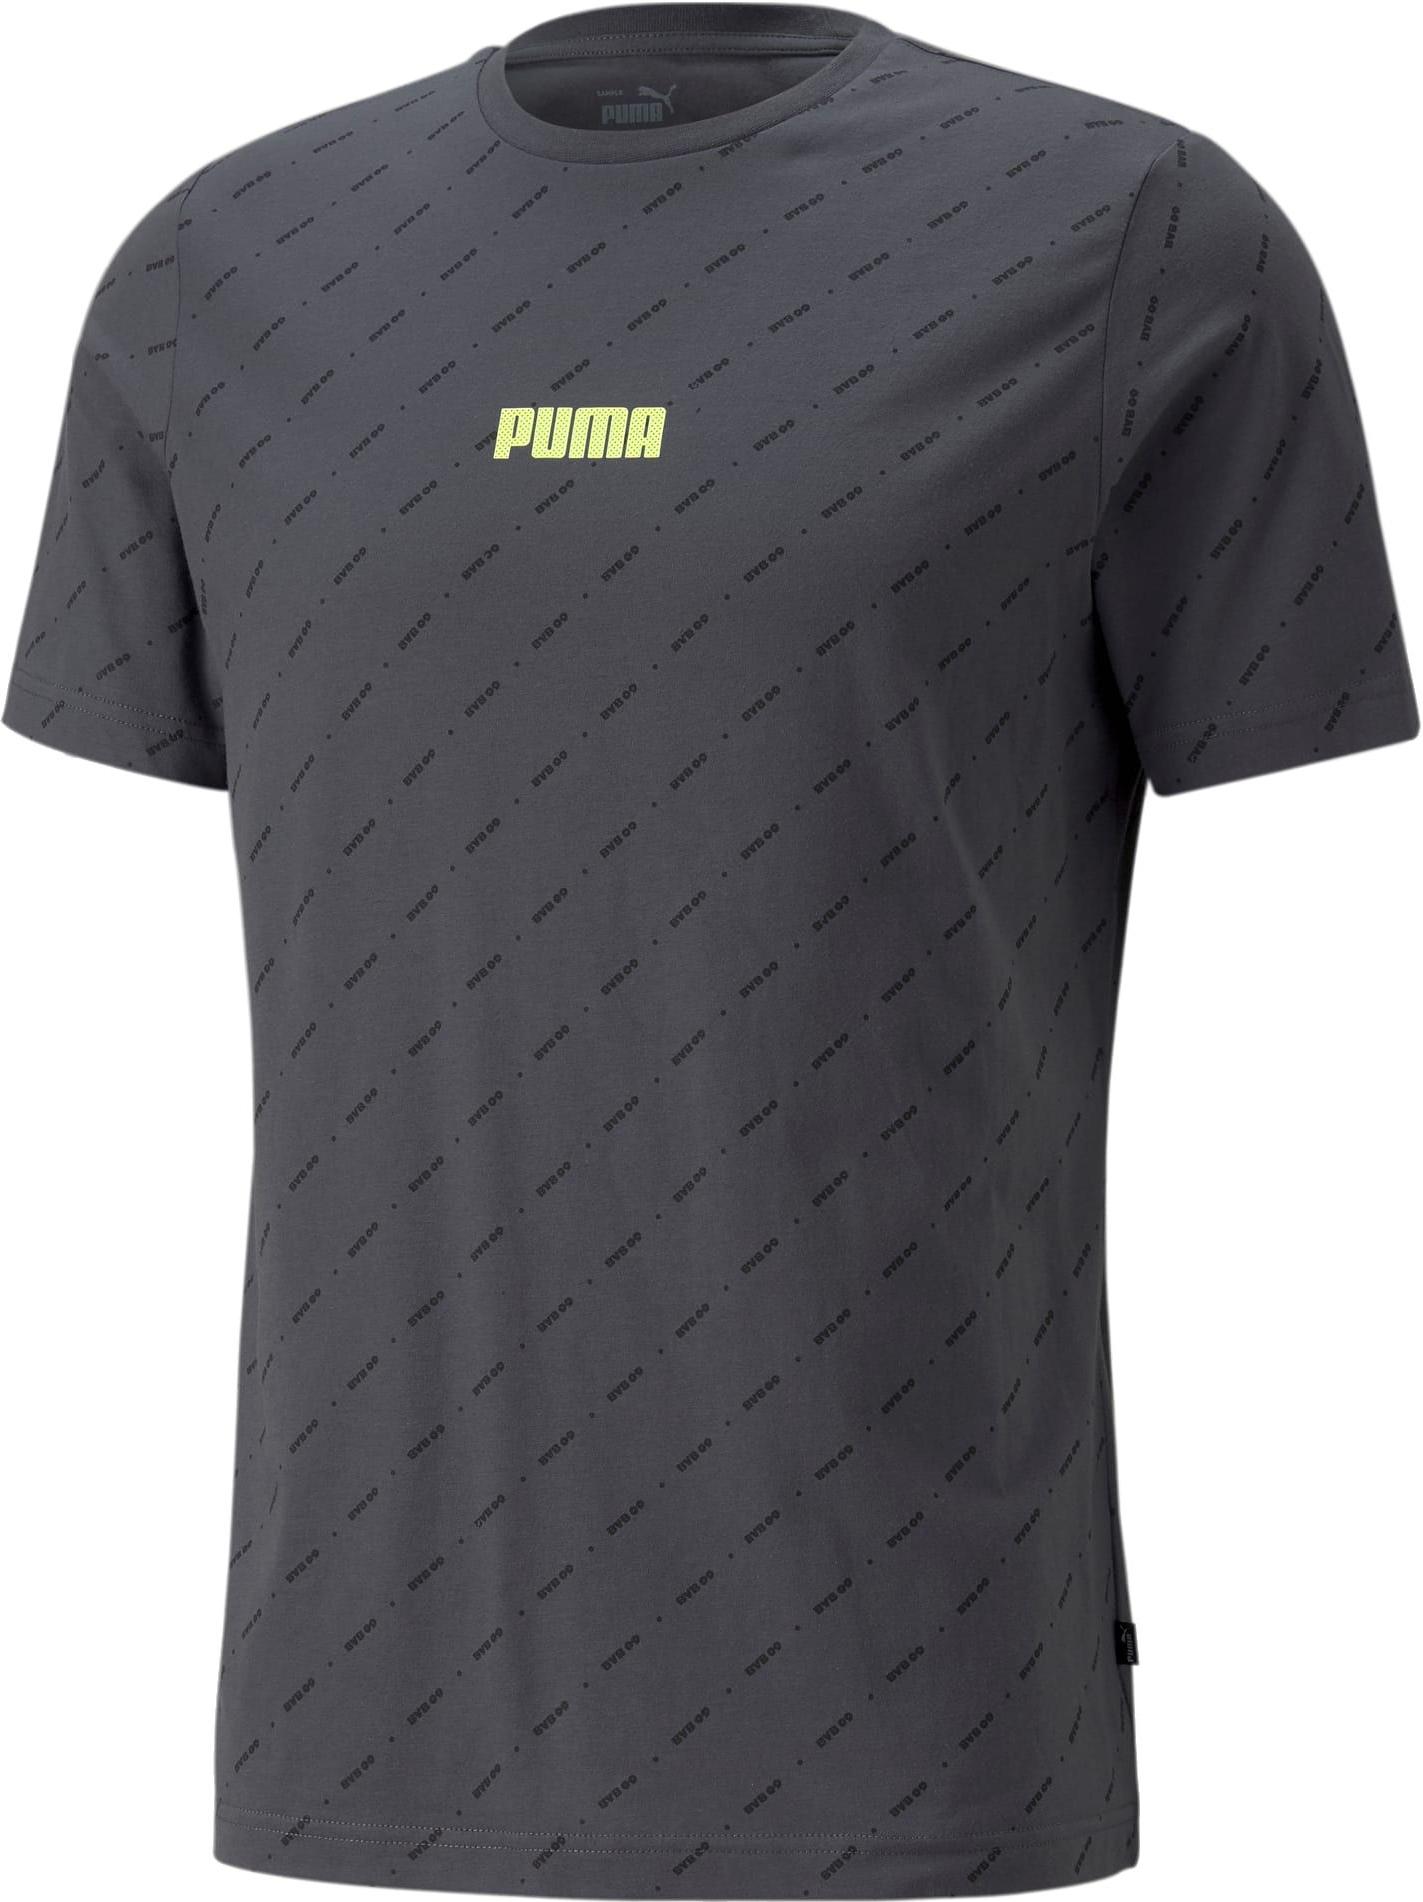 T-shirt Puma BVB Dortmund FtblLegacy T-Shirt